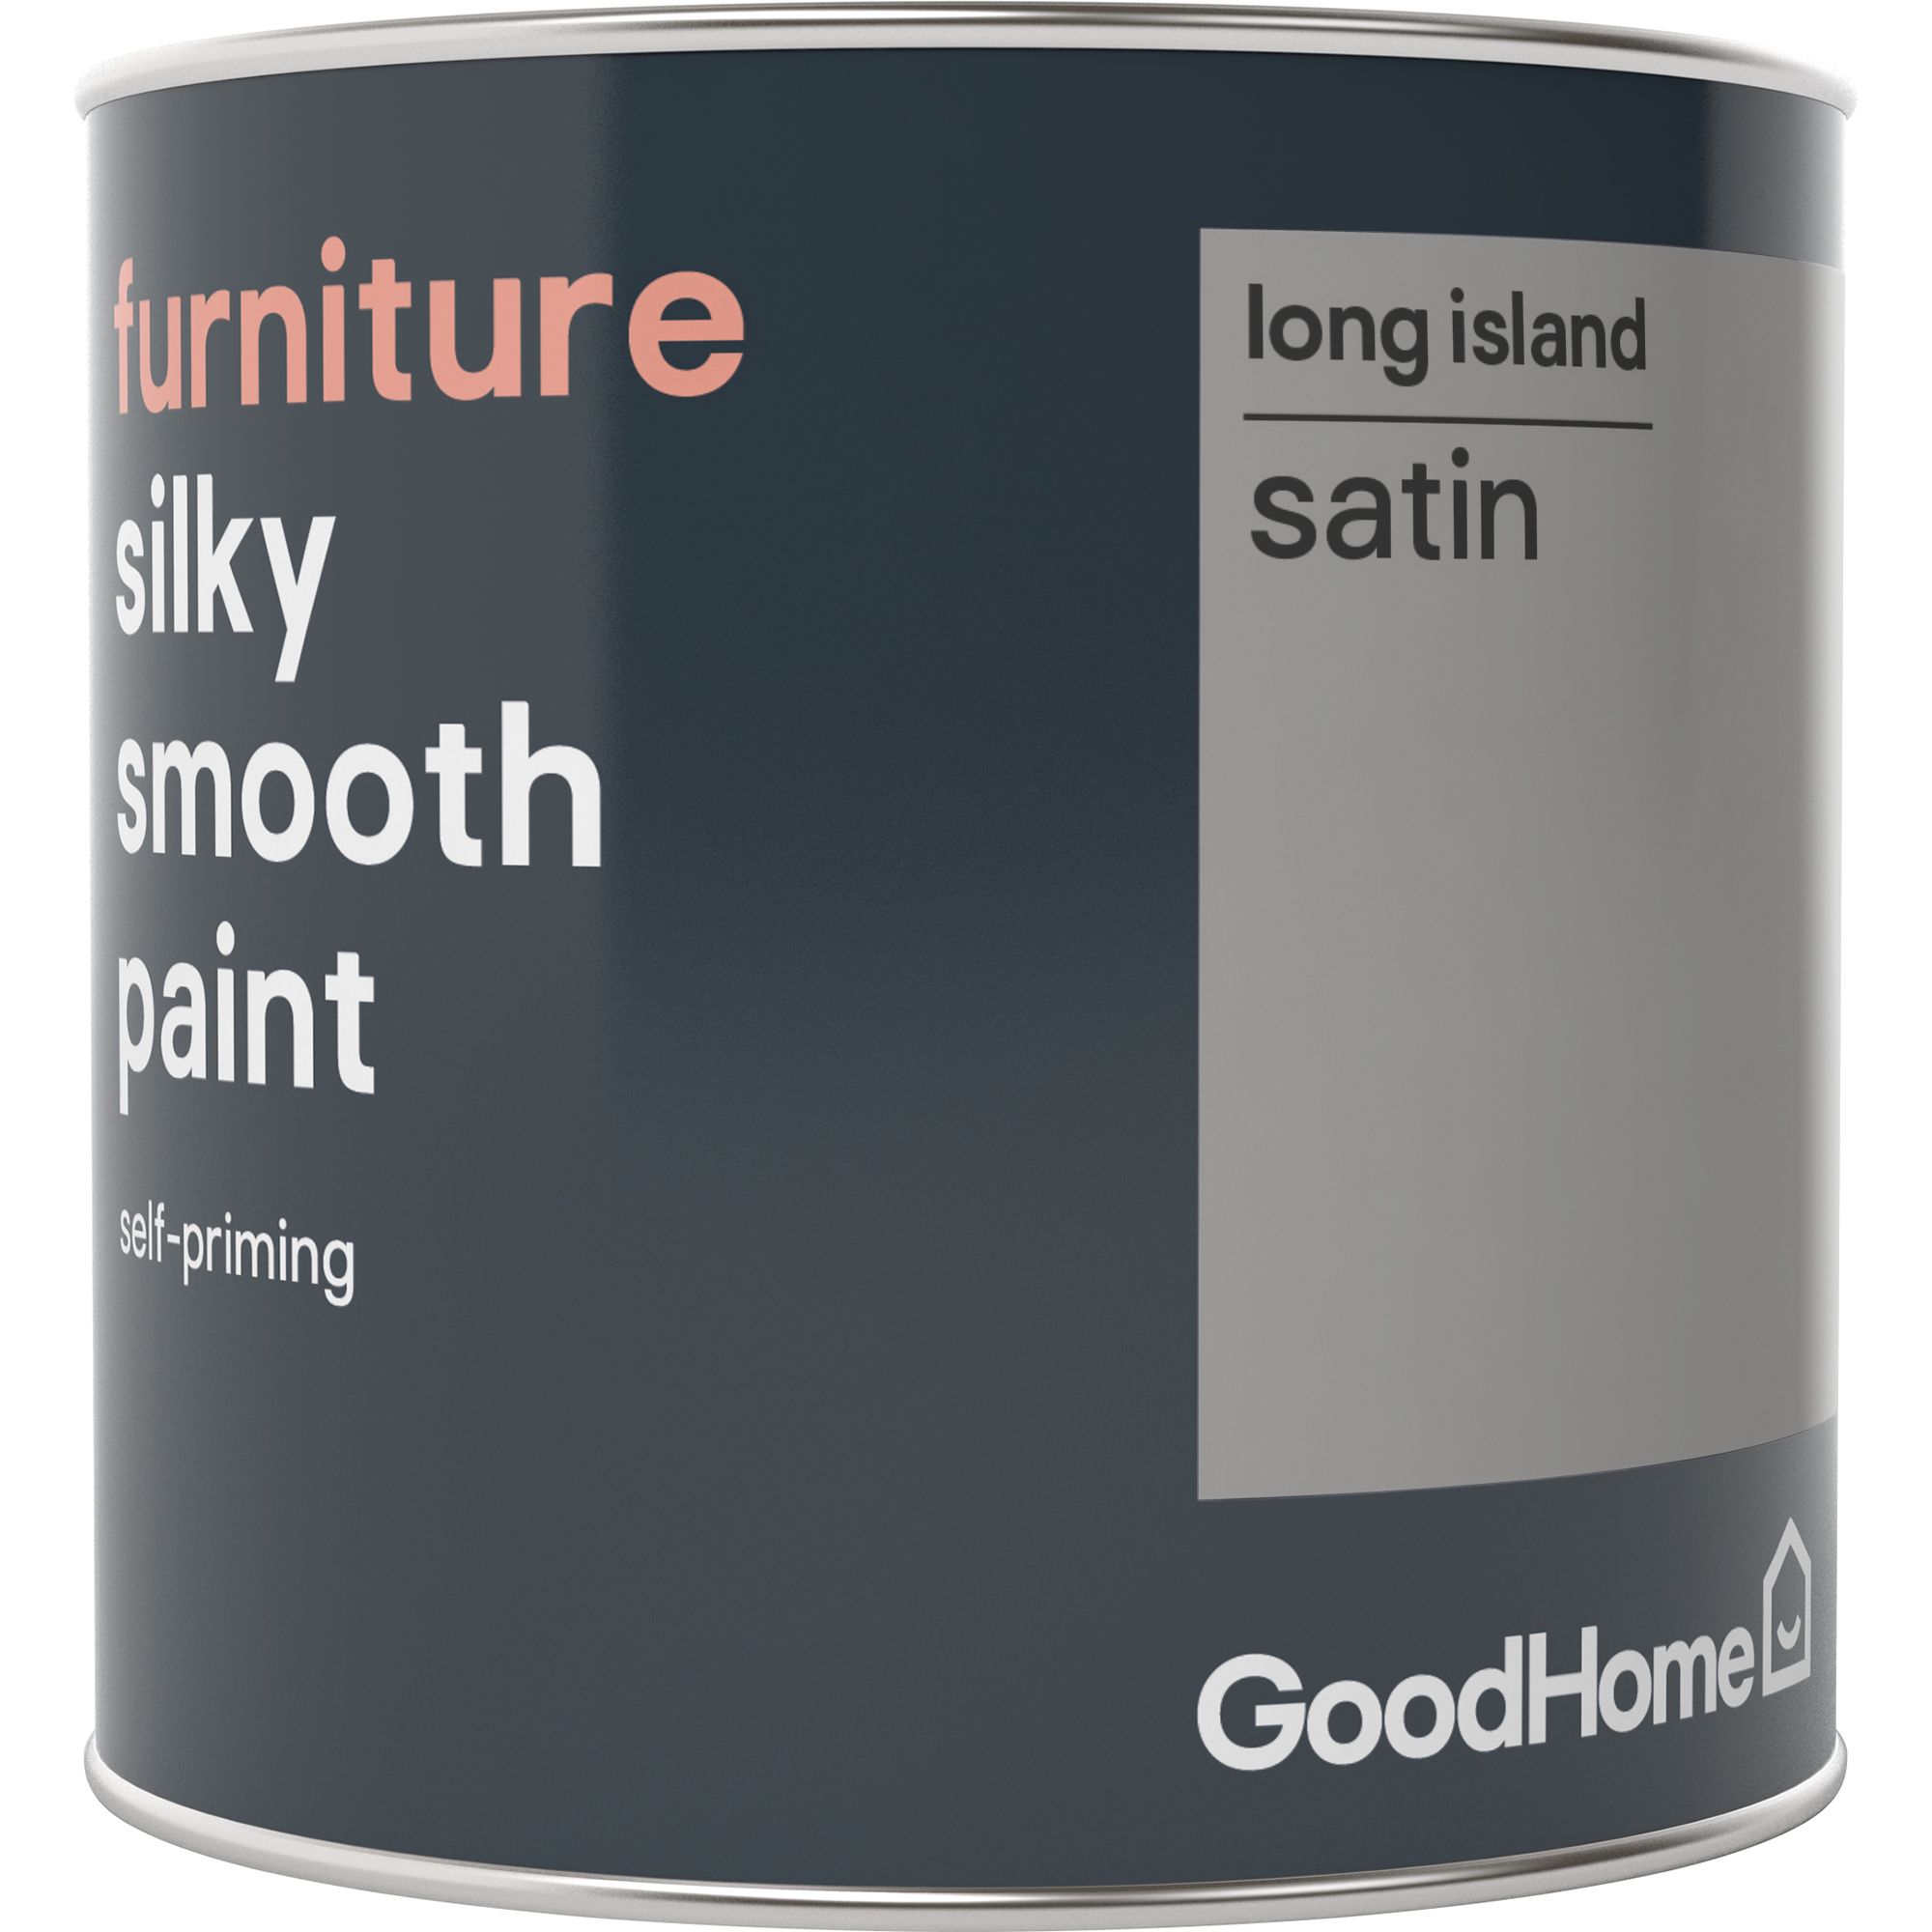 GoodHome Long island Satin Furniture paint, 500ml